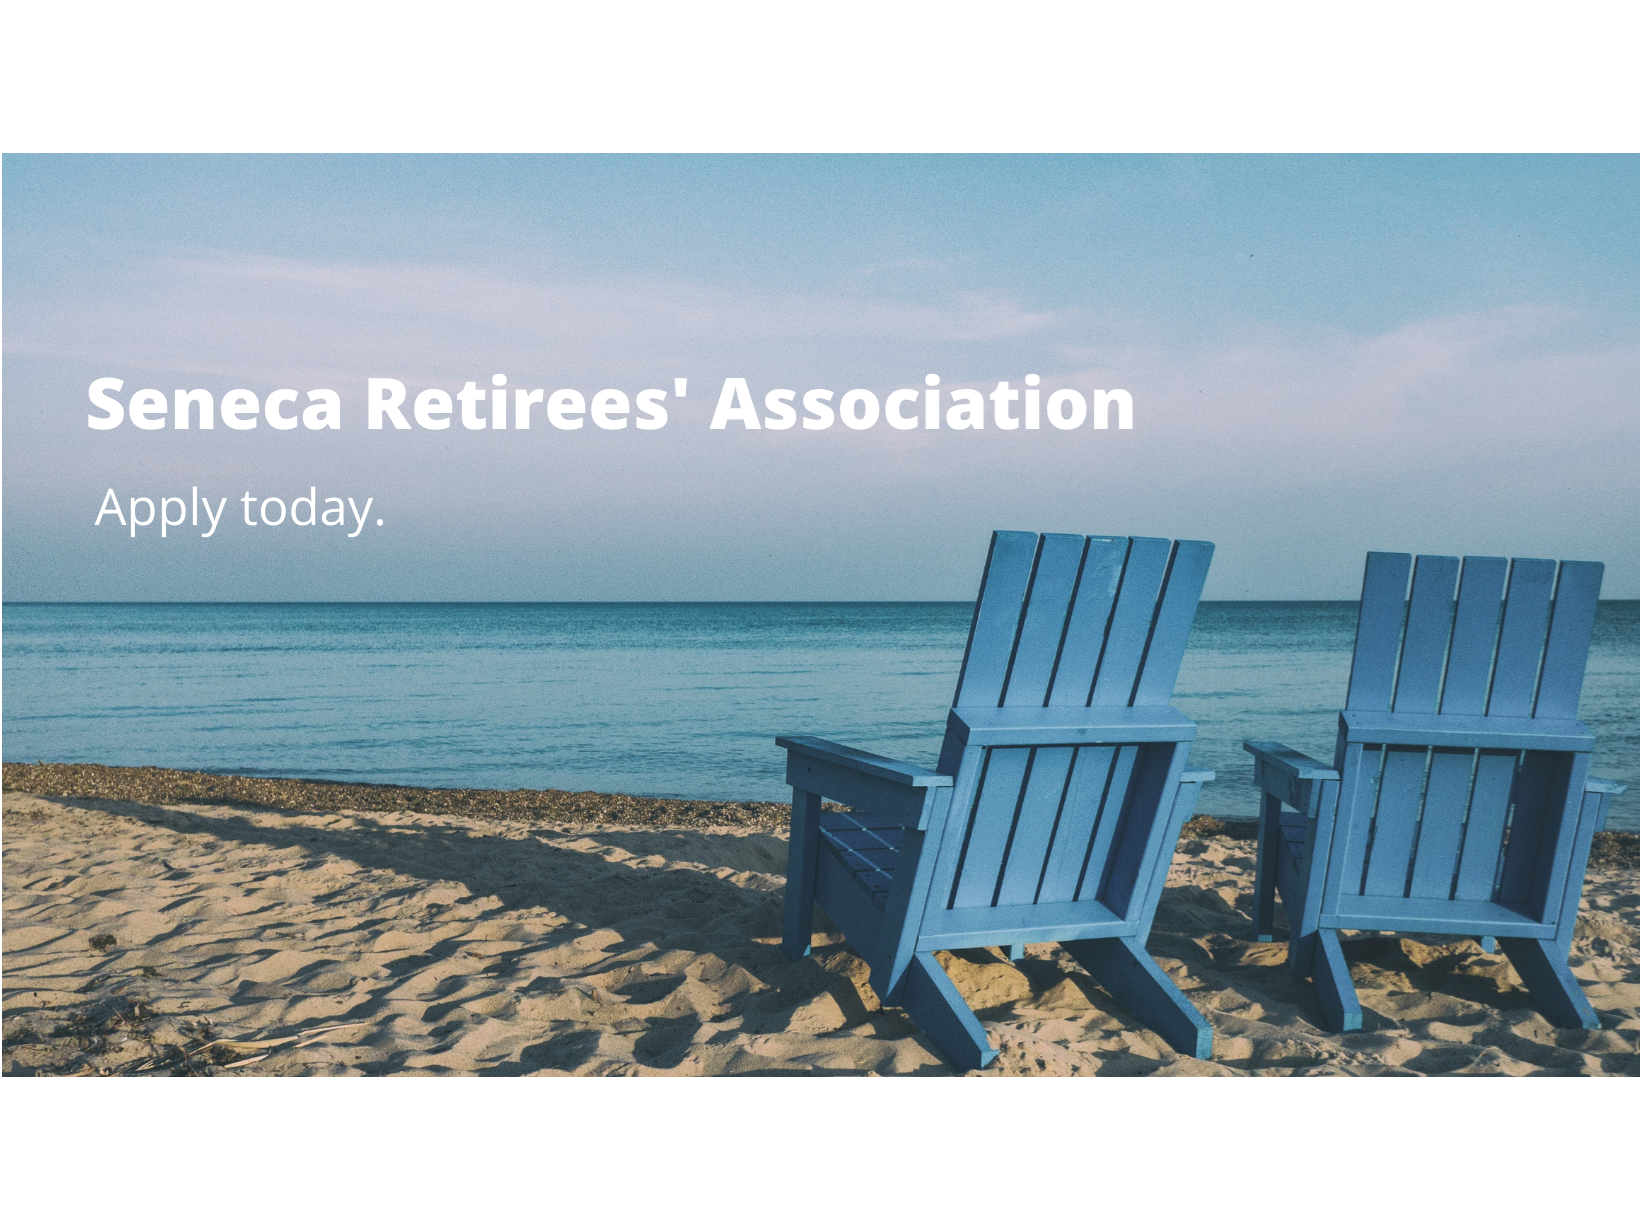 Retiring from Seneca? Join the Seneca Retirees' Association (SRA)